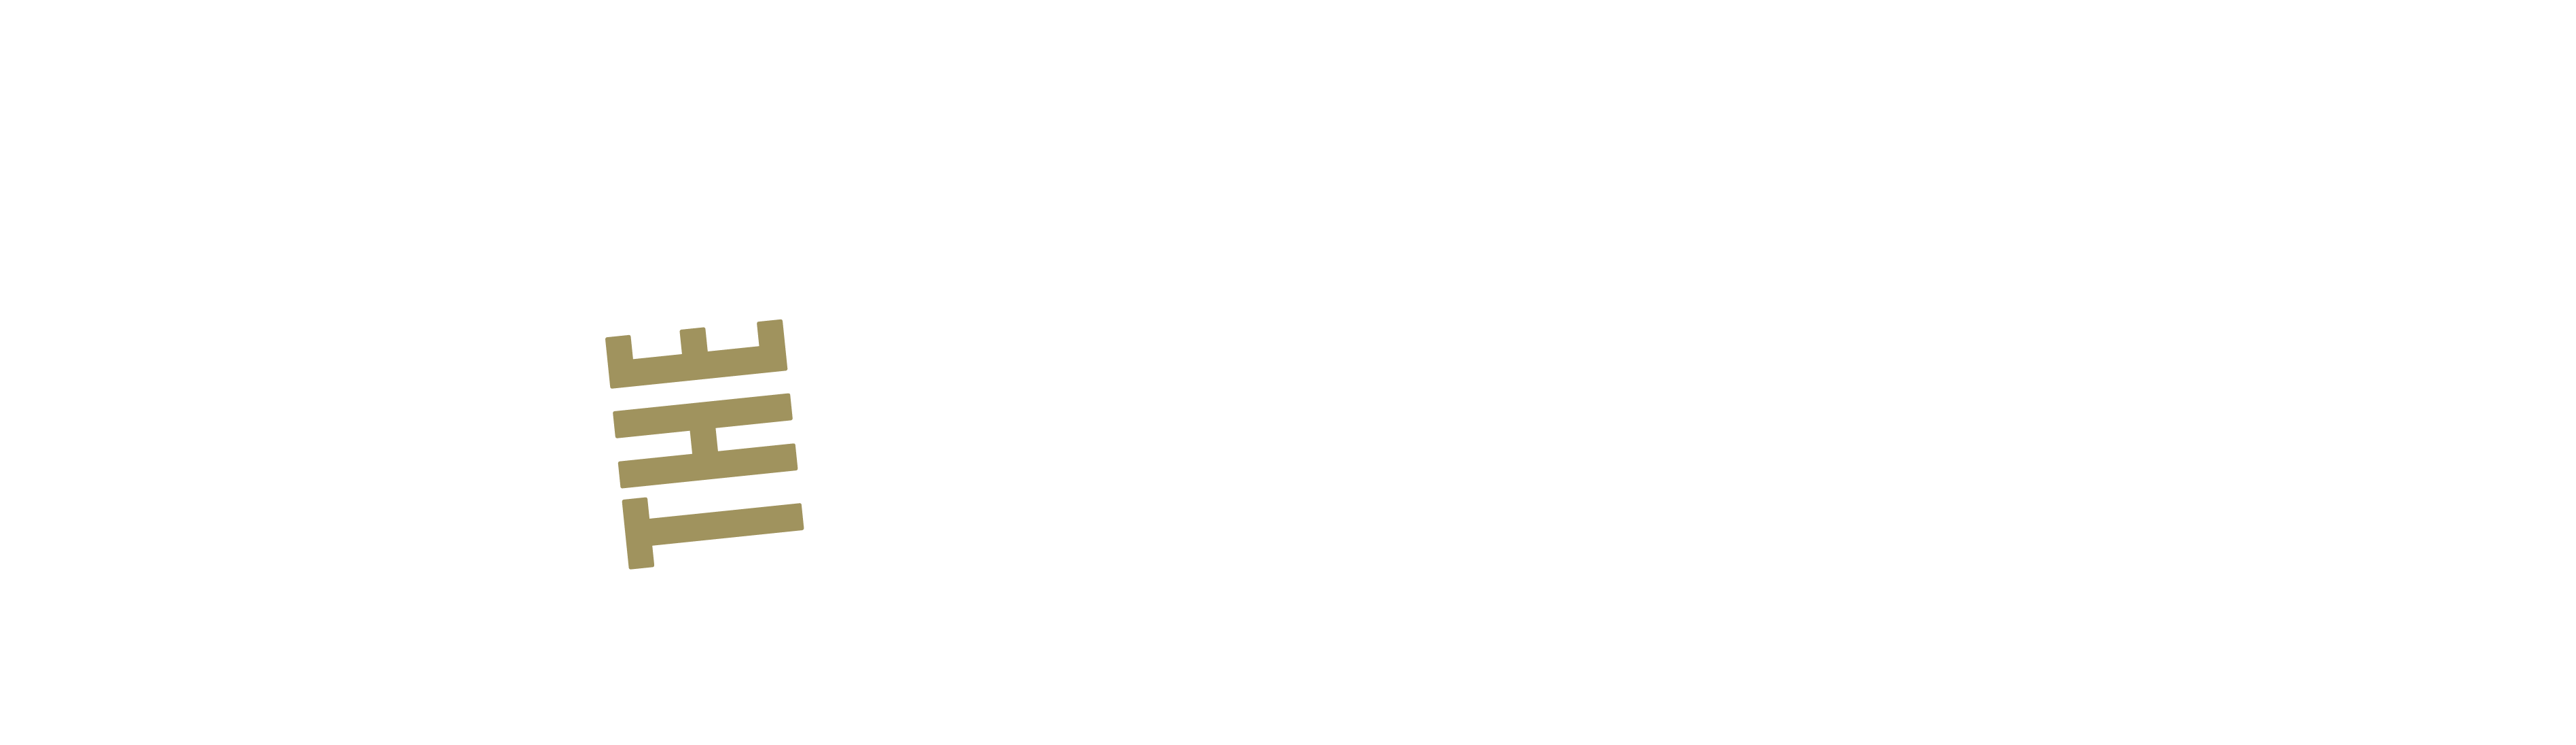 NW-TellTheStory-Logo-01